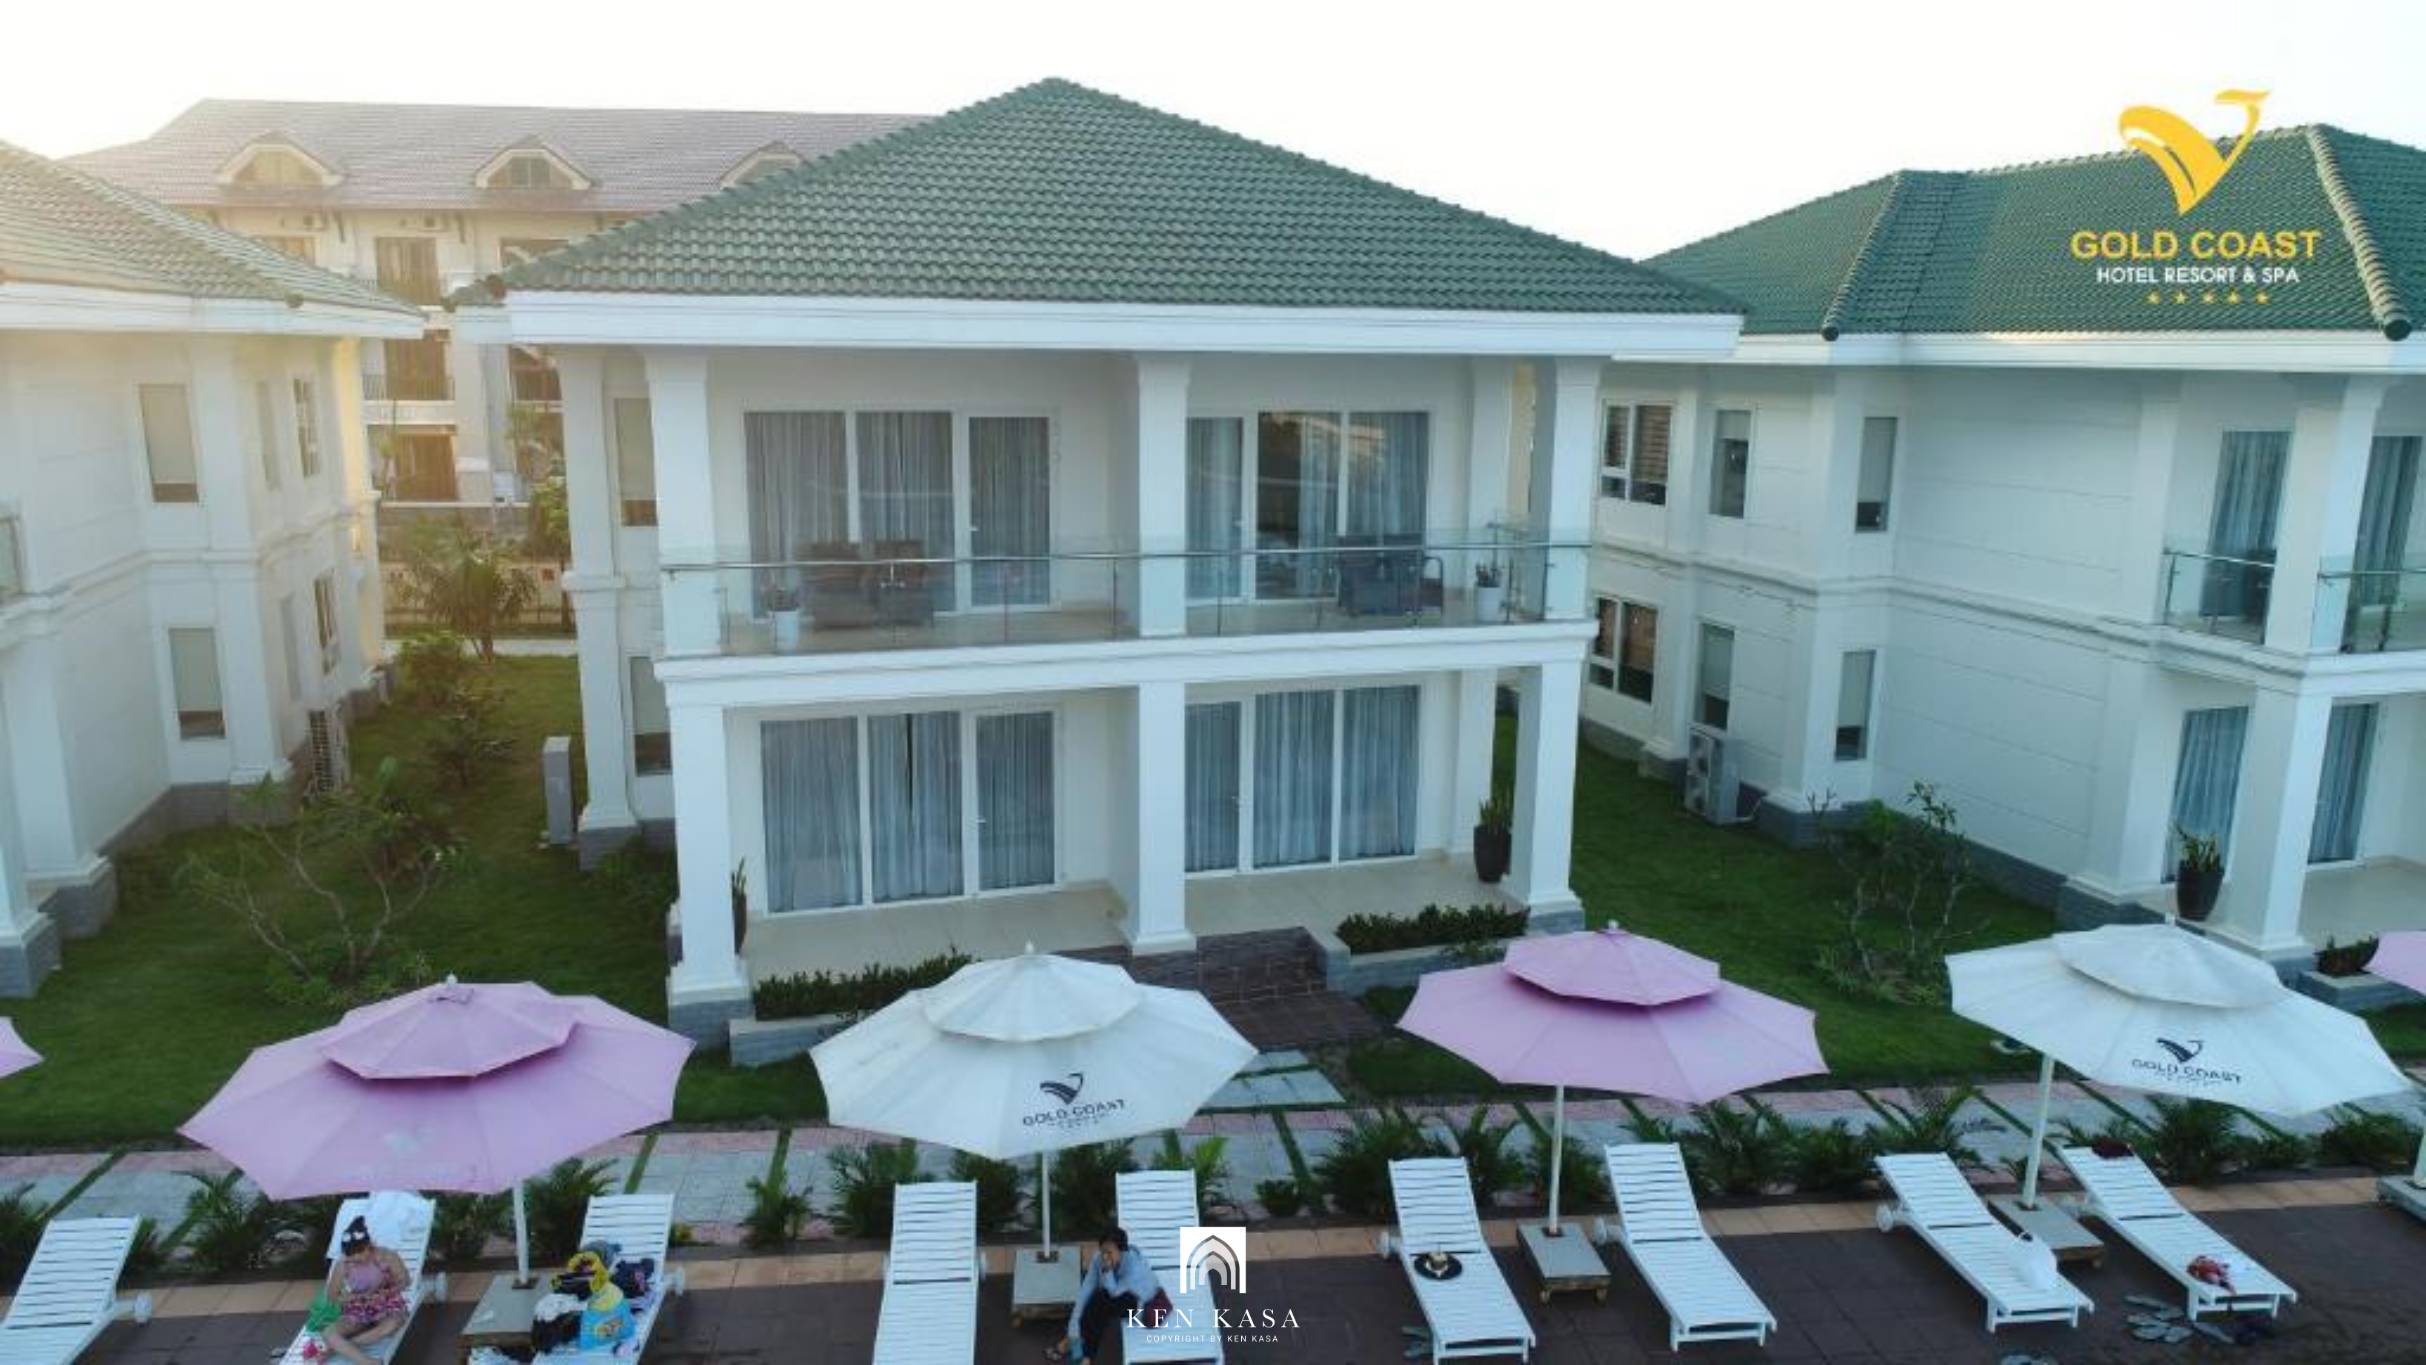 bể bơi ngoài trời tại Gold Coast Hotel Resort & Spa